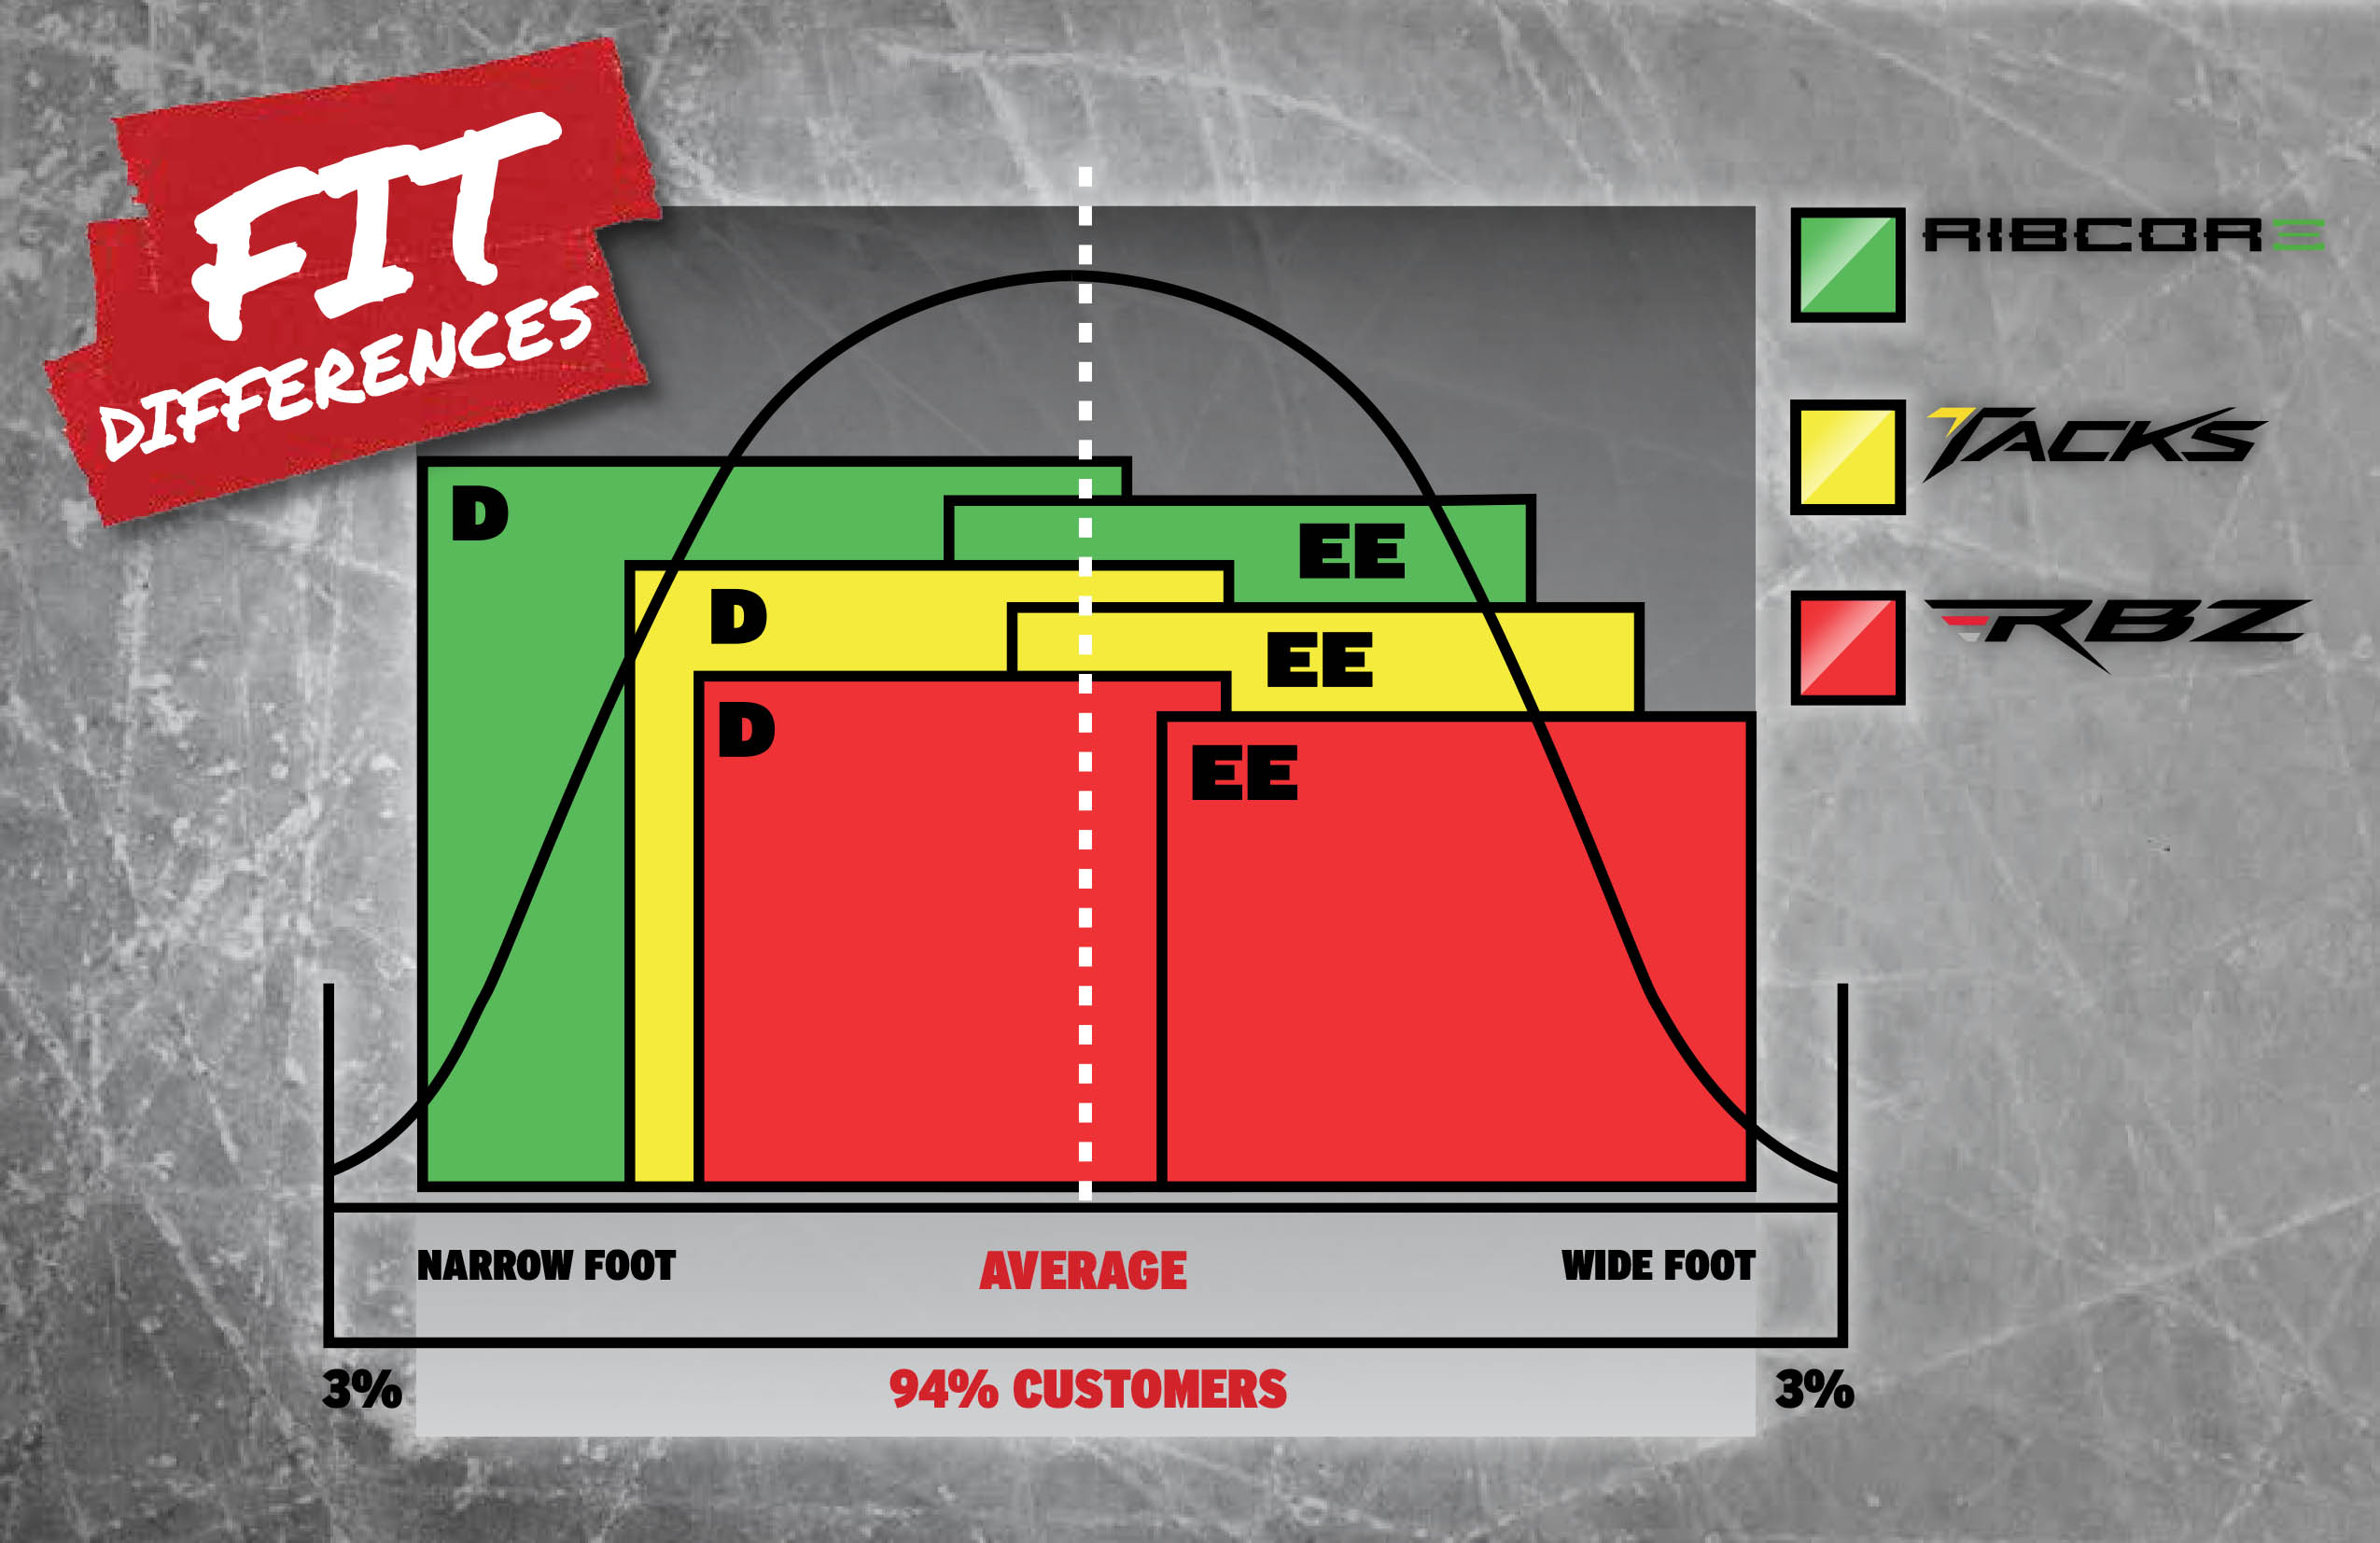 Ccm Skate Fit Chart